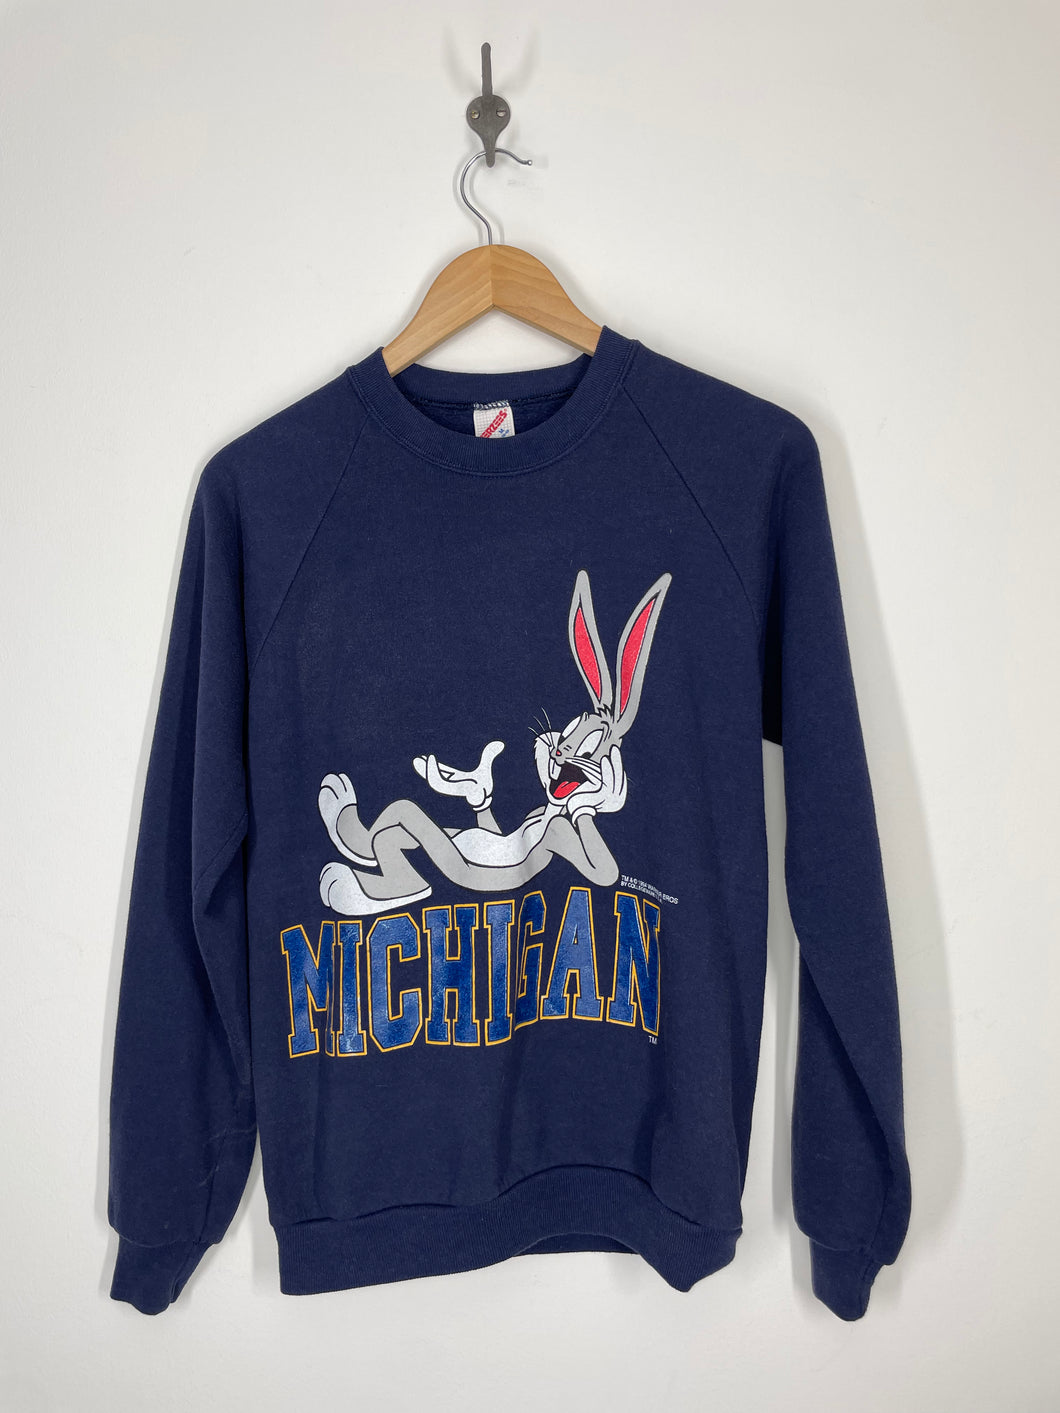 University of Michigan 1994 Bugs Bunny Crewneck Sweatshirt - Jerzees - M